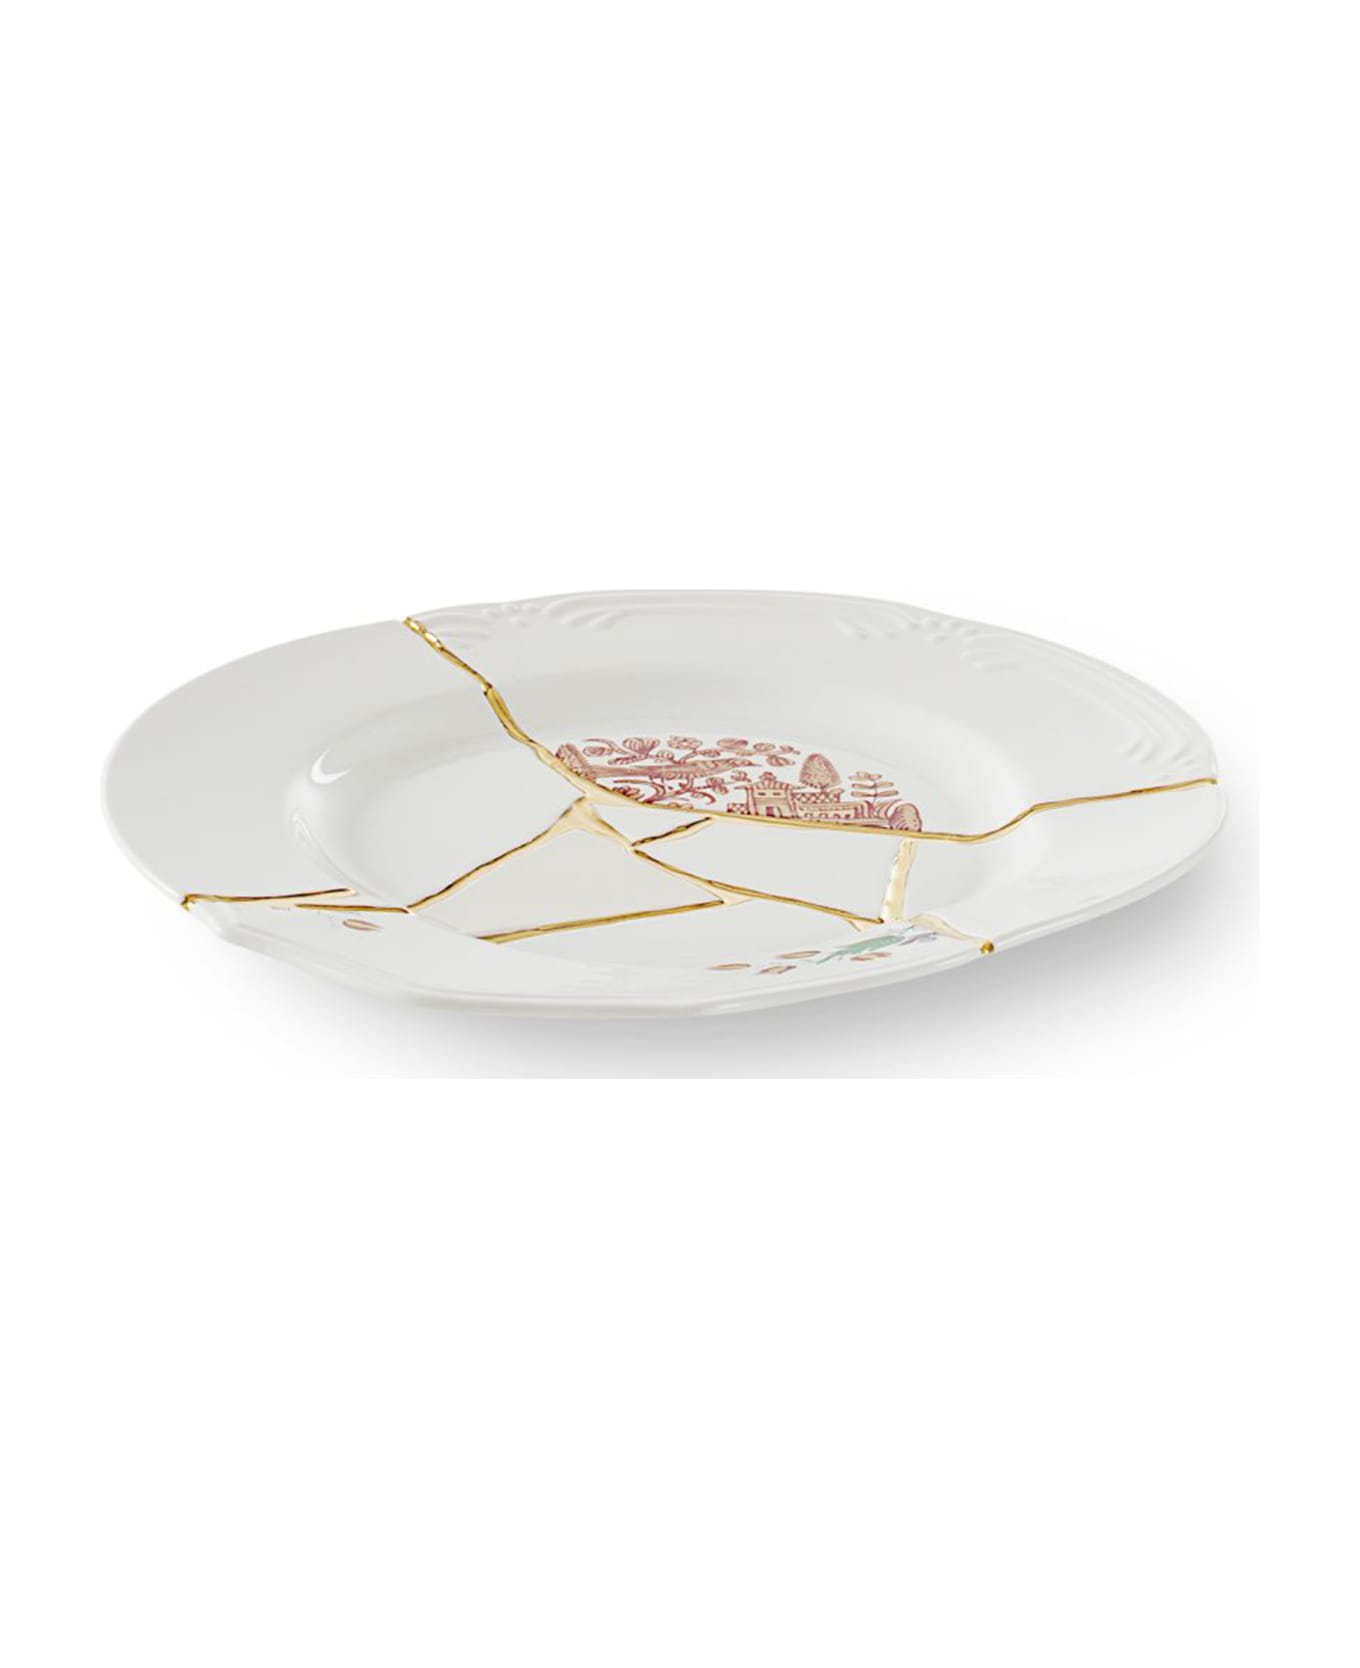 Seletti 'kintsugi' Dinner Plate - Multicolor